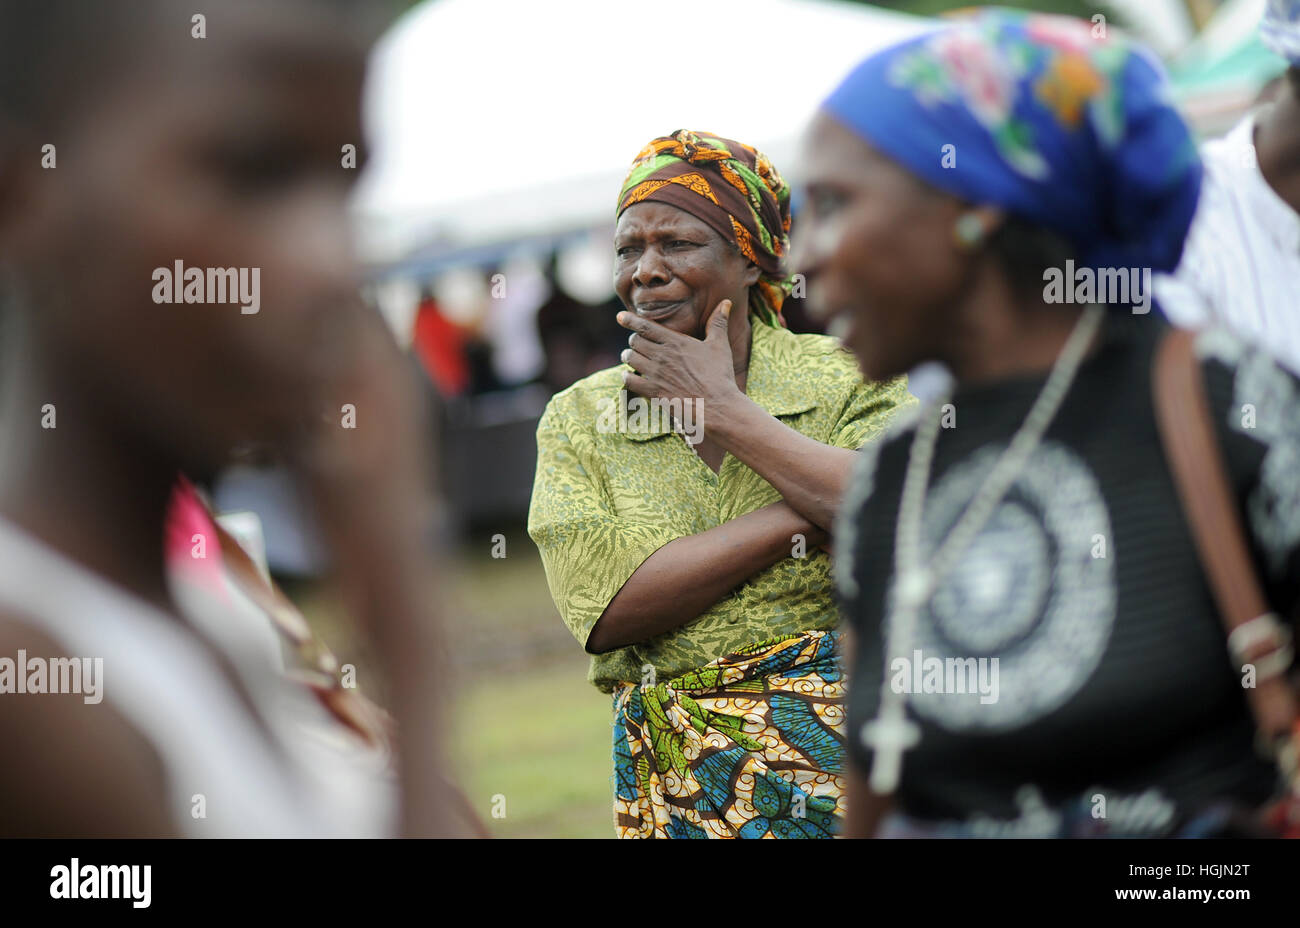 Lusaka, Zambia. 08th Mar, 2016. Women attend an event celebrating international Women's Day in Lusaka, Zambia, 08 March 2016. Photo: Britta Pedersen/dpa-Zentralbild/ZB/dpa/Alamy Live News Stock Photo